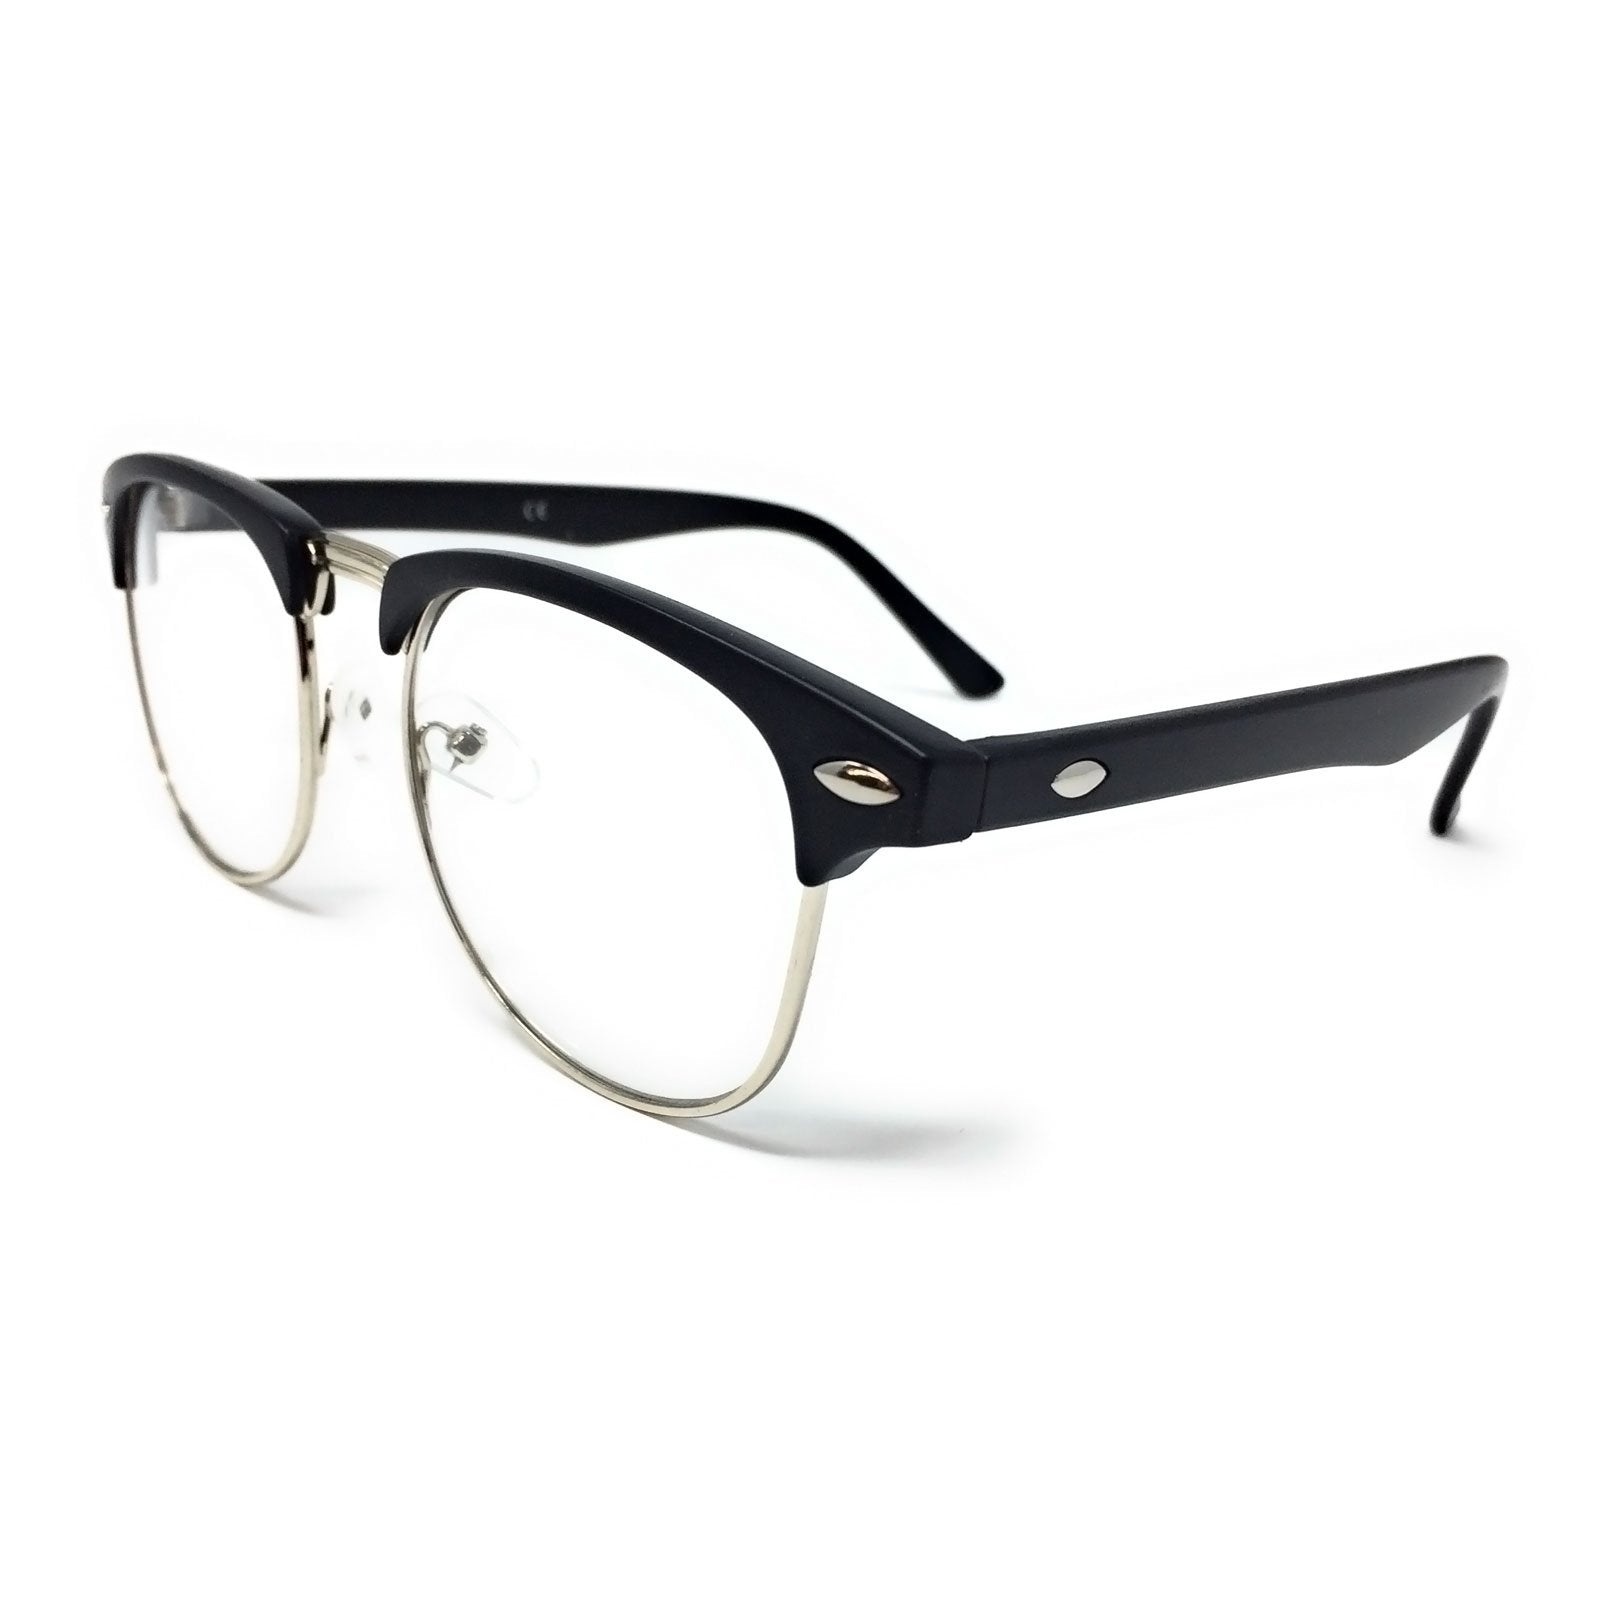 Wholesale 1950s Half Rim Clear Lens Glasses - Matte Black Frame